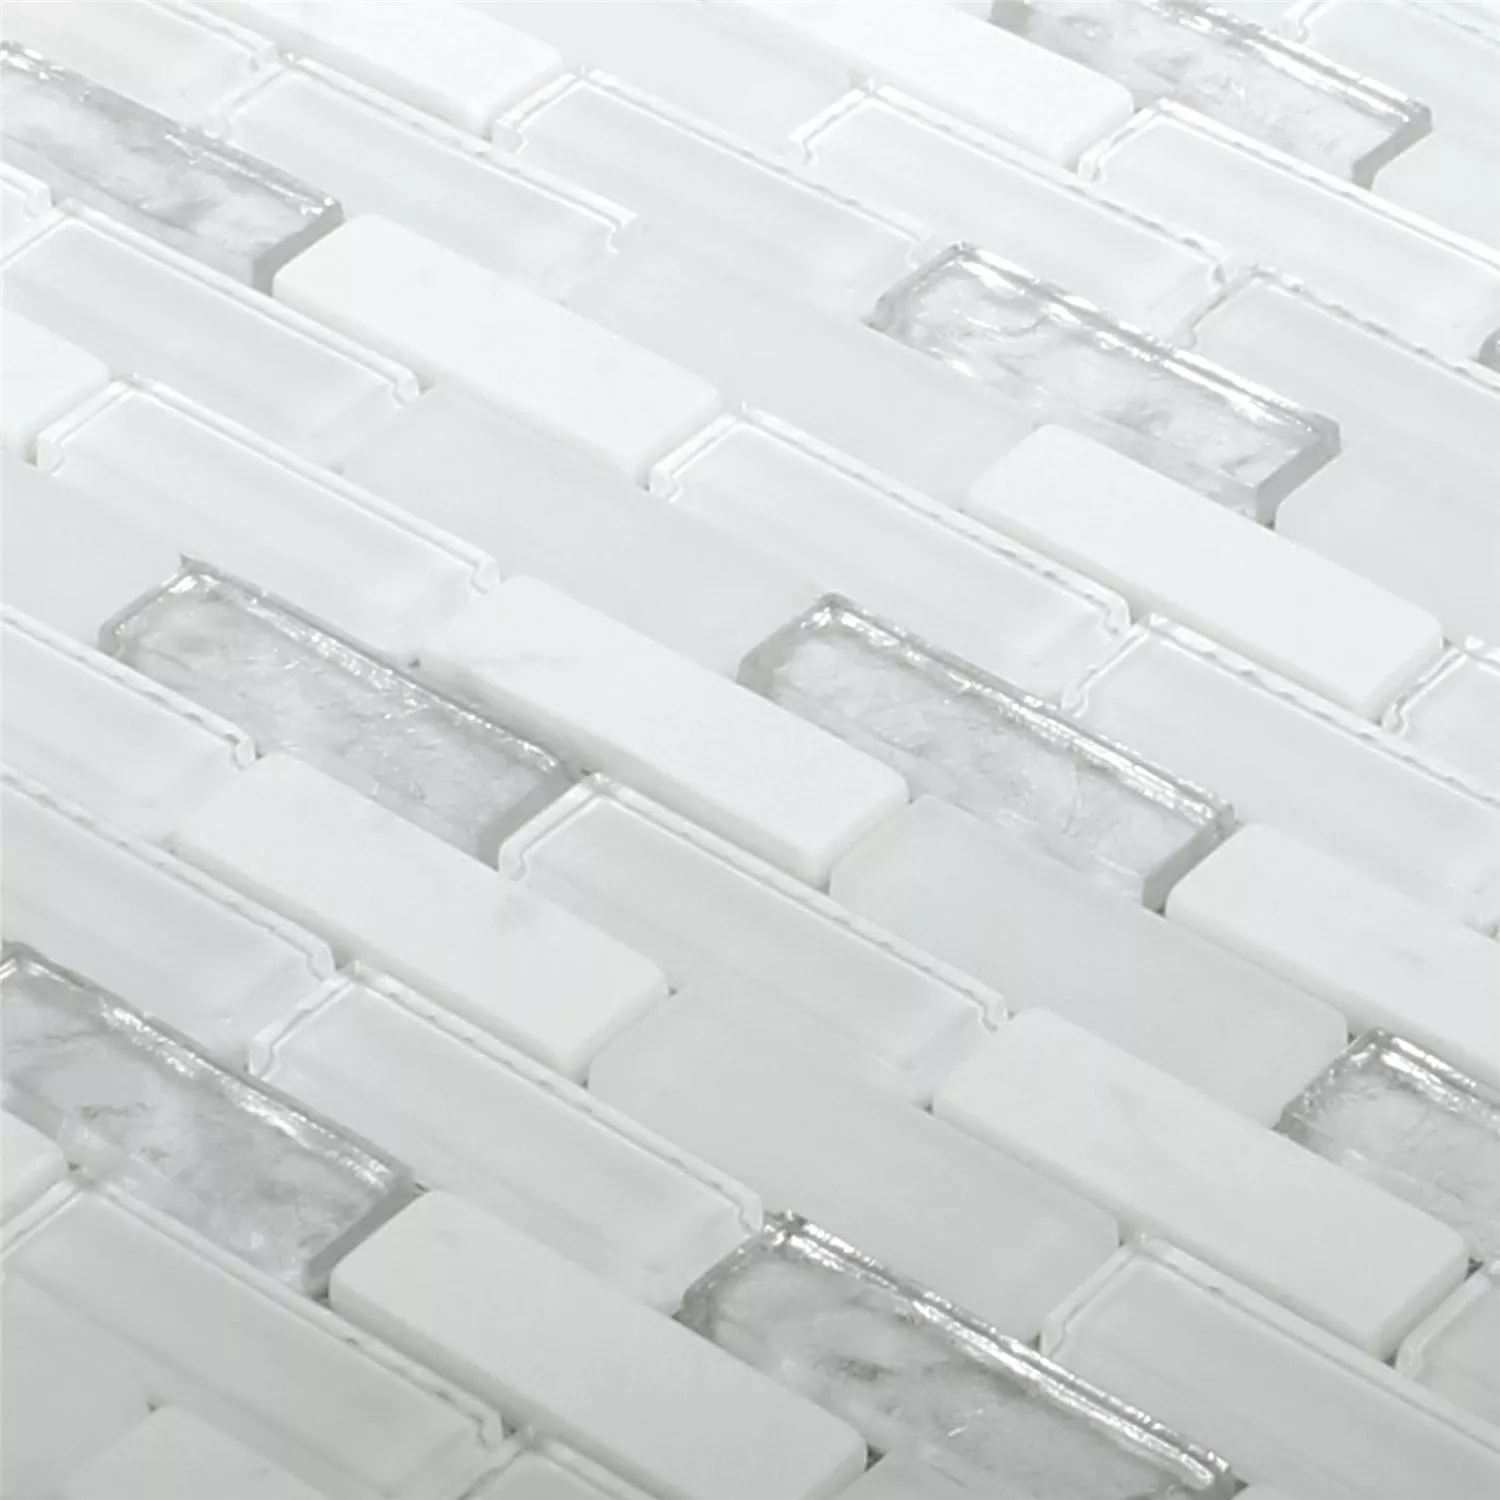 Sample Mosaic Tiles Glass Marble Civan White Silver